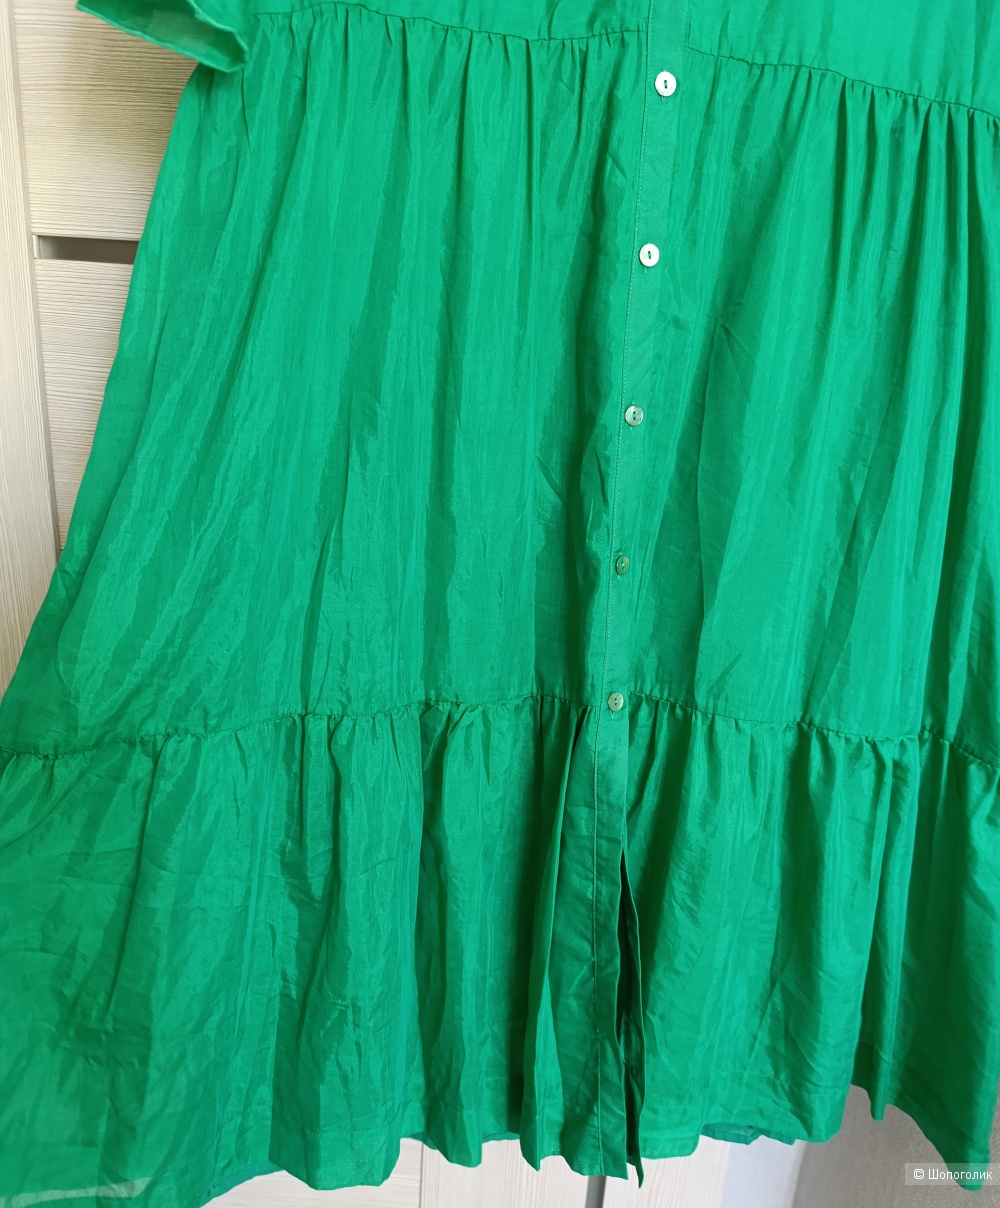 Платье Pierro Moretti.,размер 50